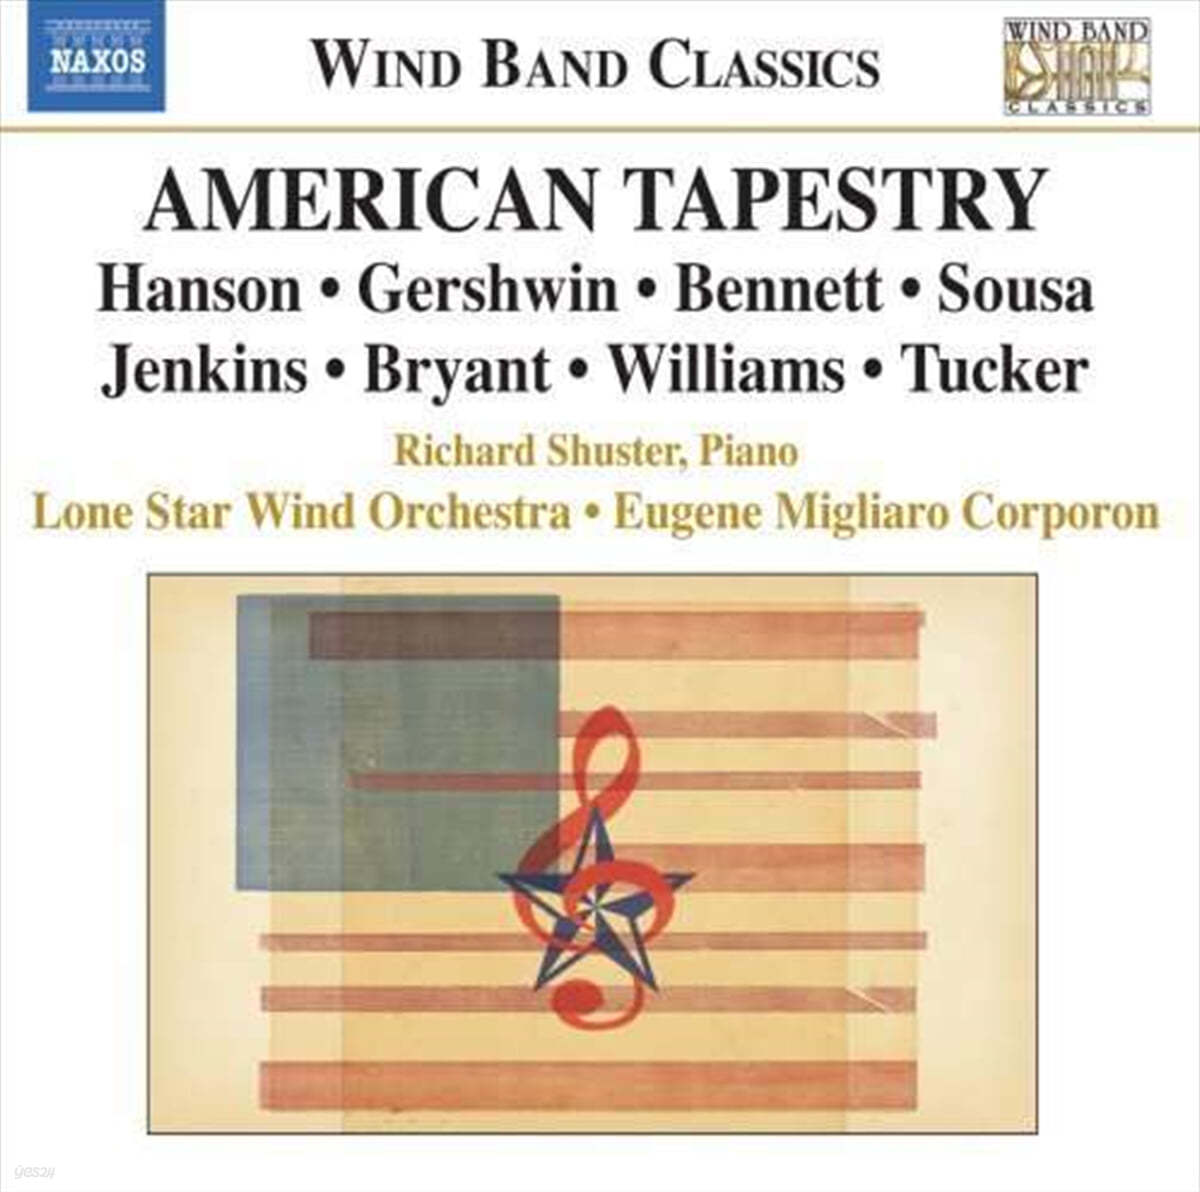 Eugene Milgliaro Corporon 관악밴드를 위한 음악 (American Tapestry - Music for Wind Band) 